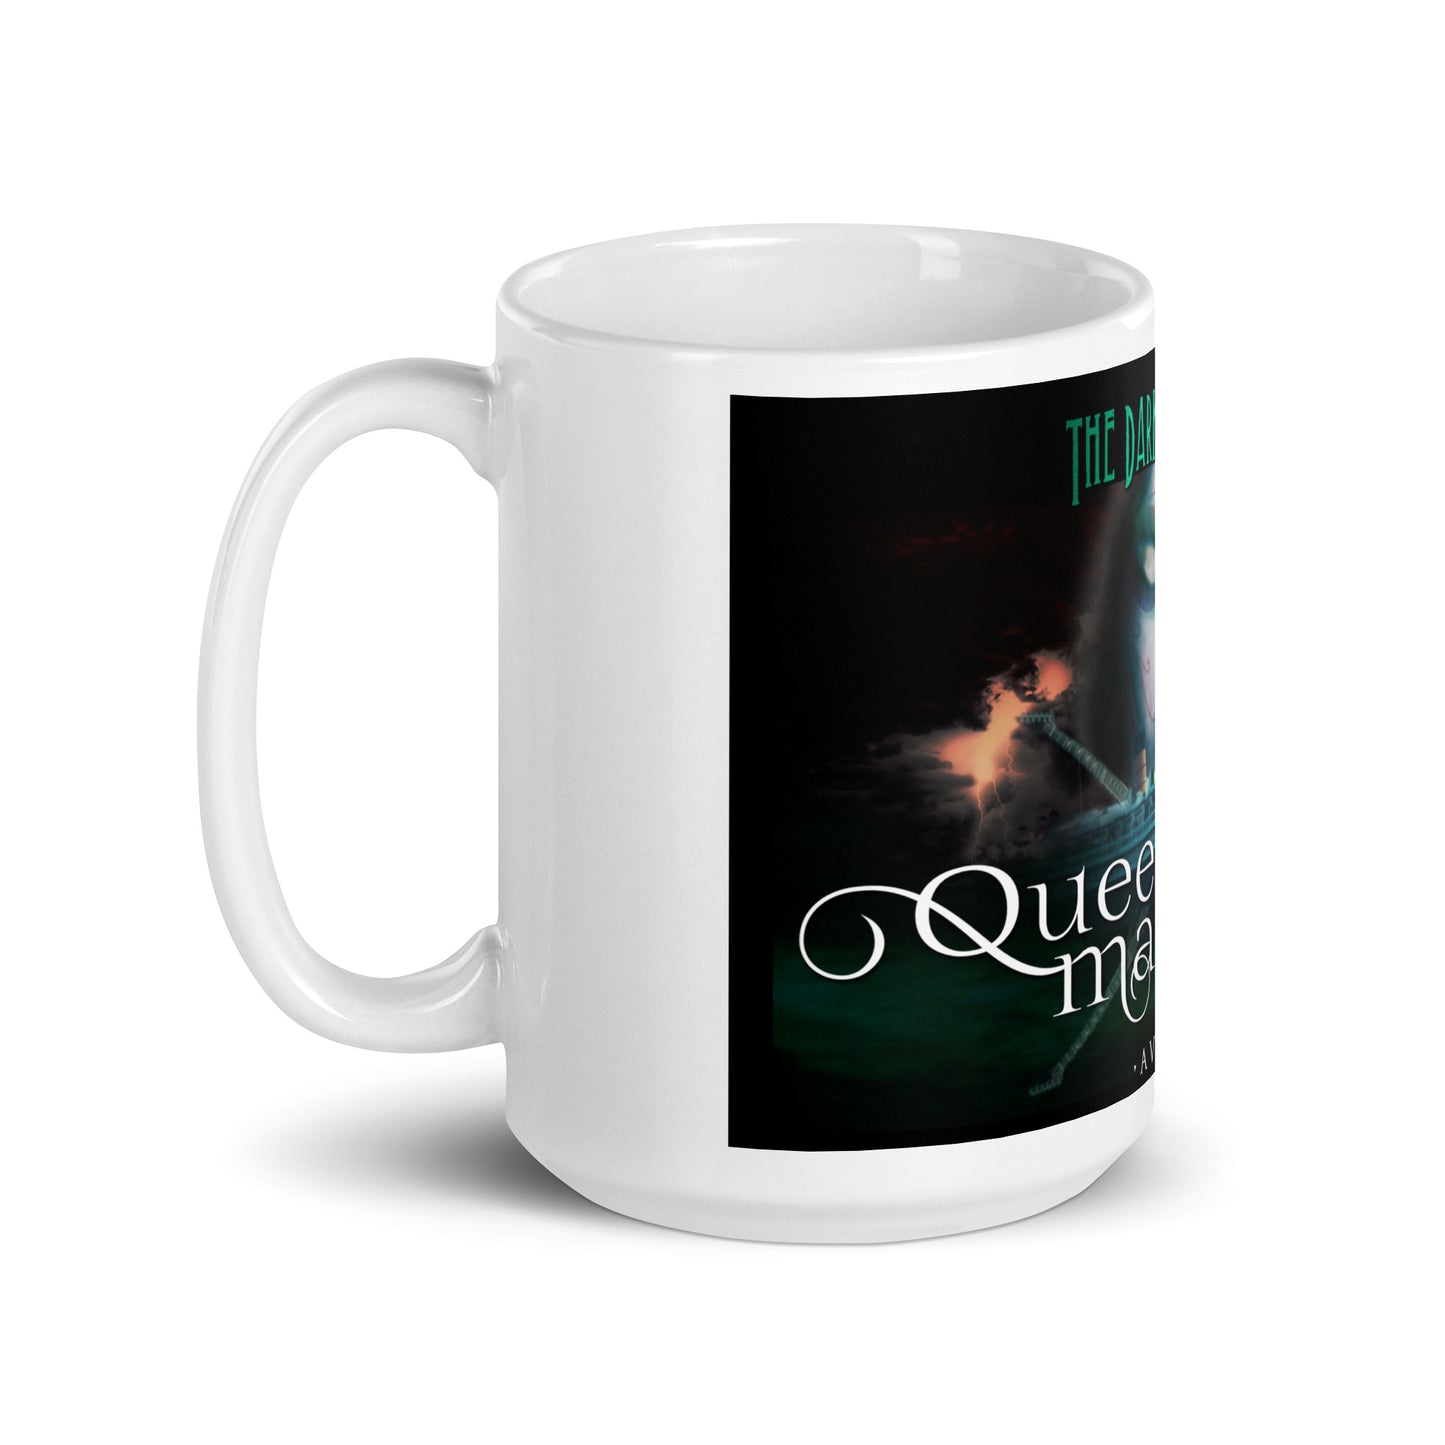 Queen Mary Mug